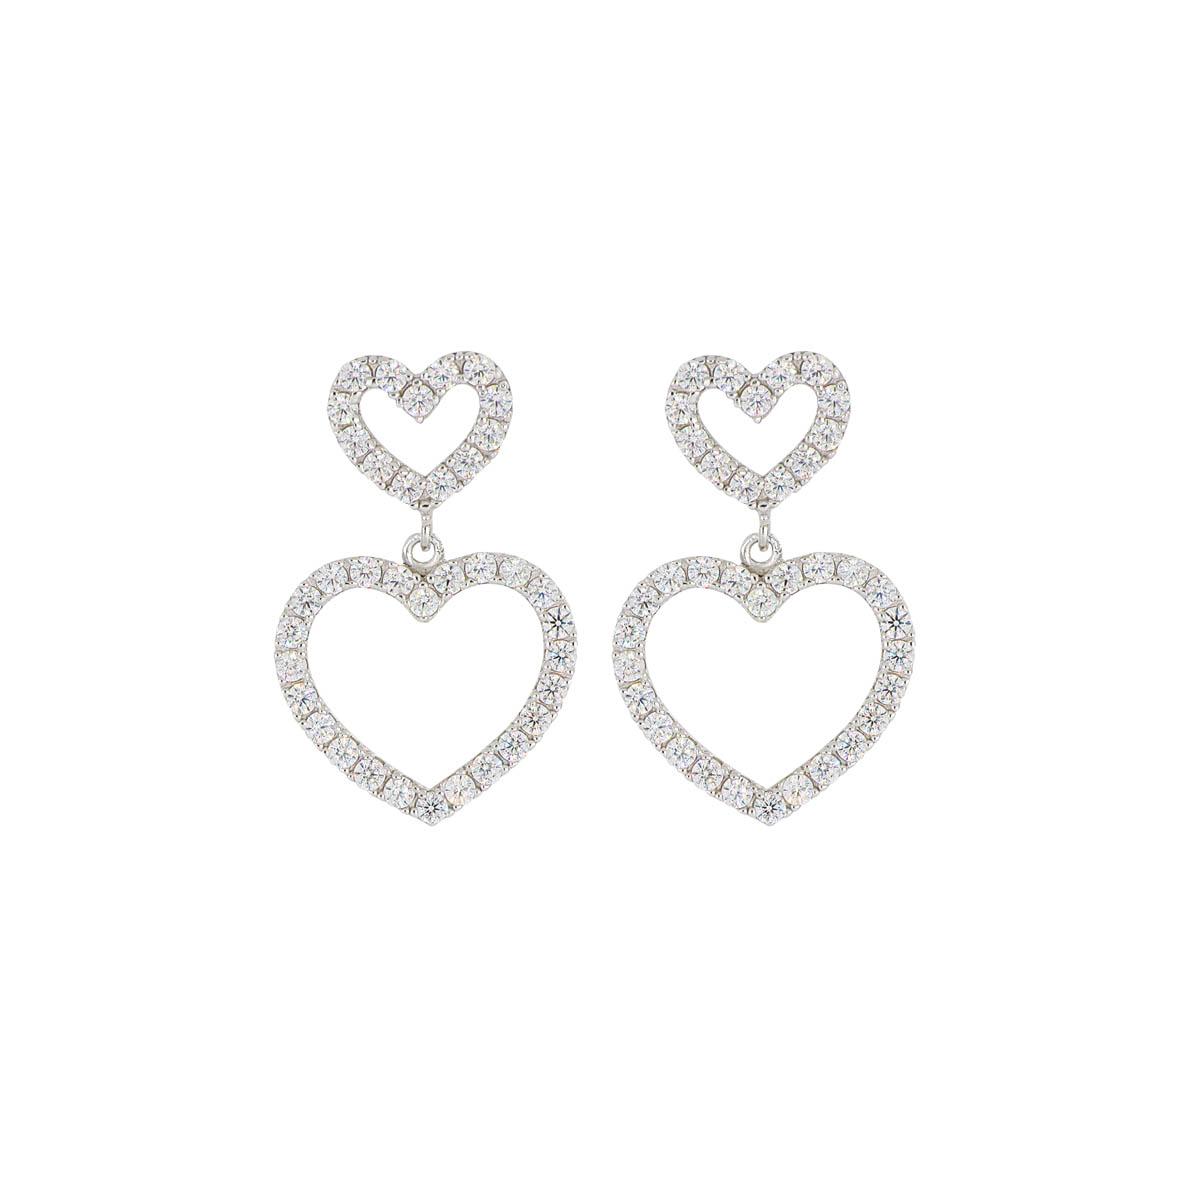 Heart earrings in 925 rhodium silver with zircons - ZOR1252-LB